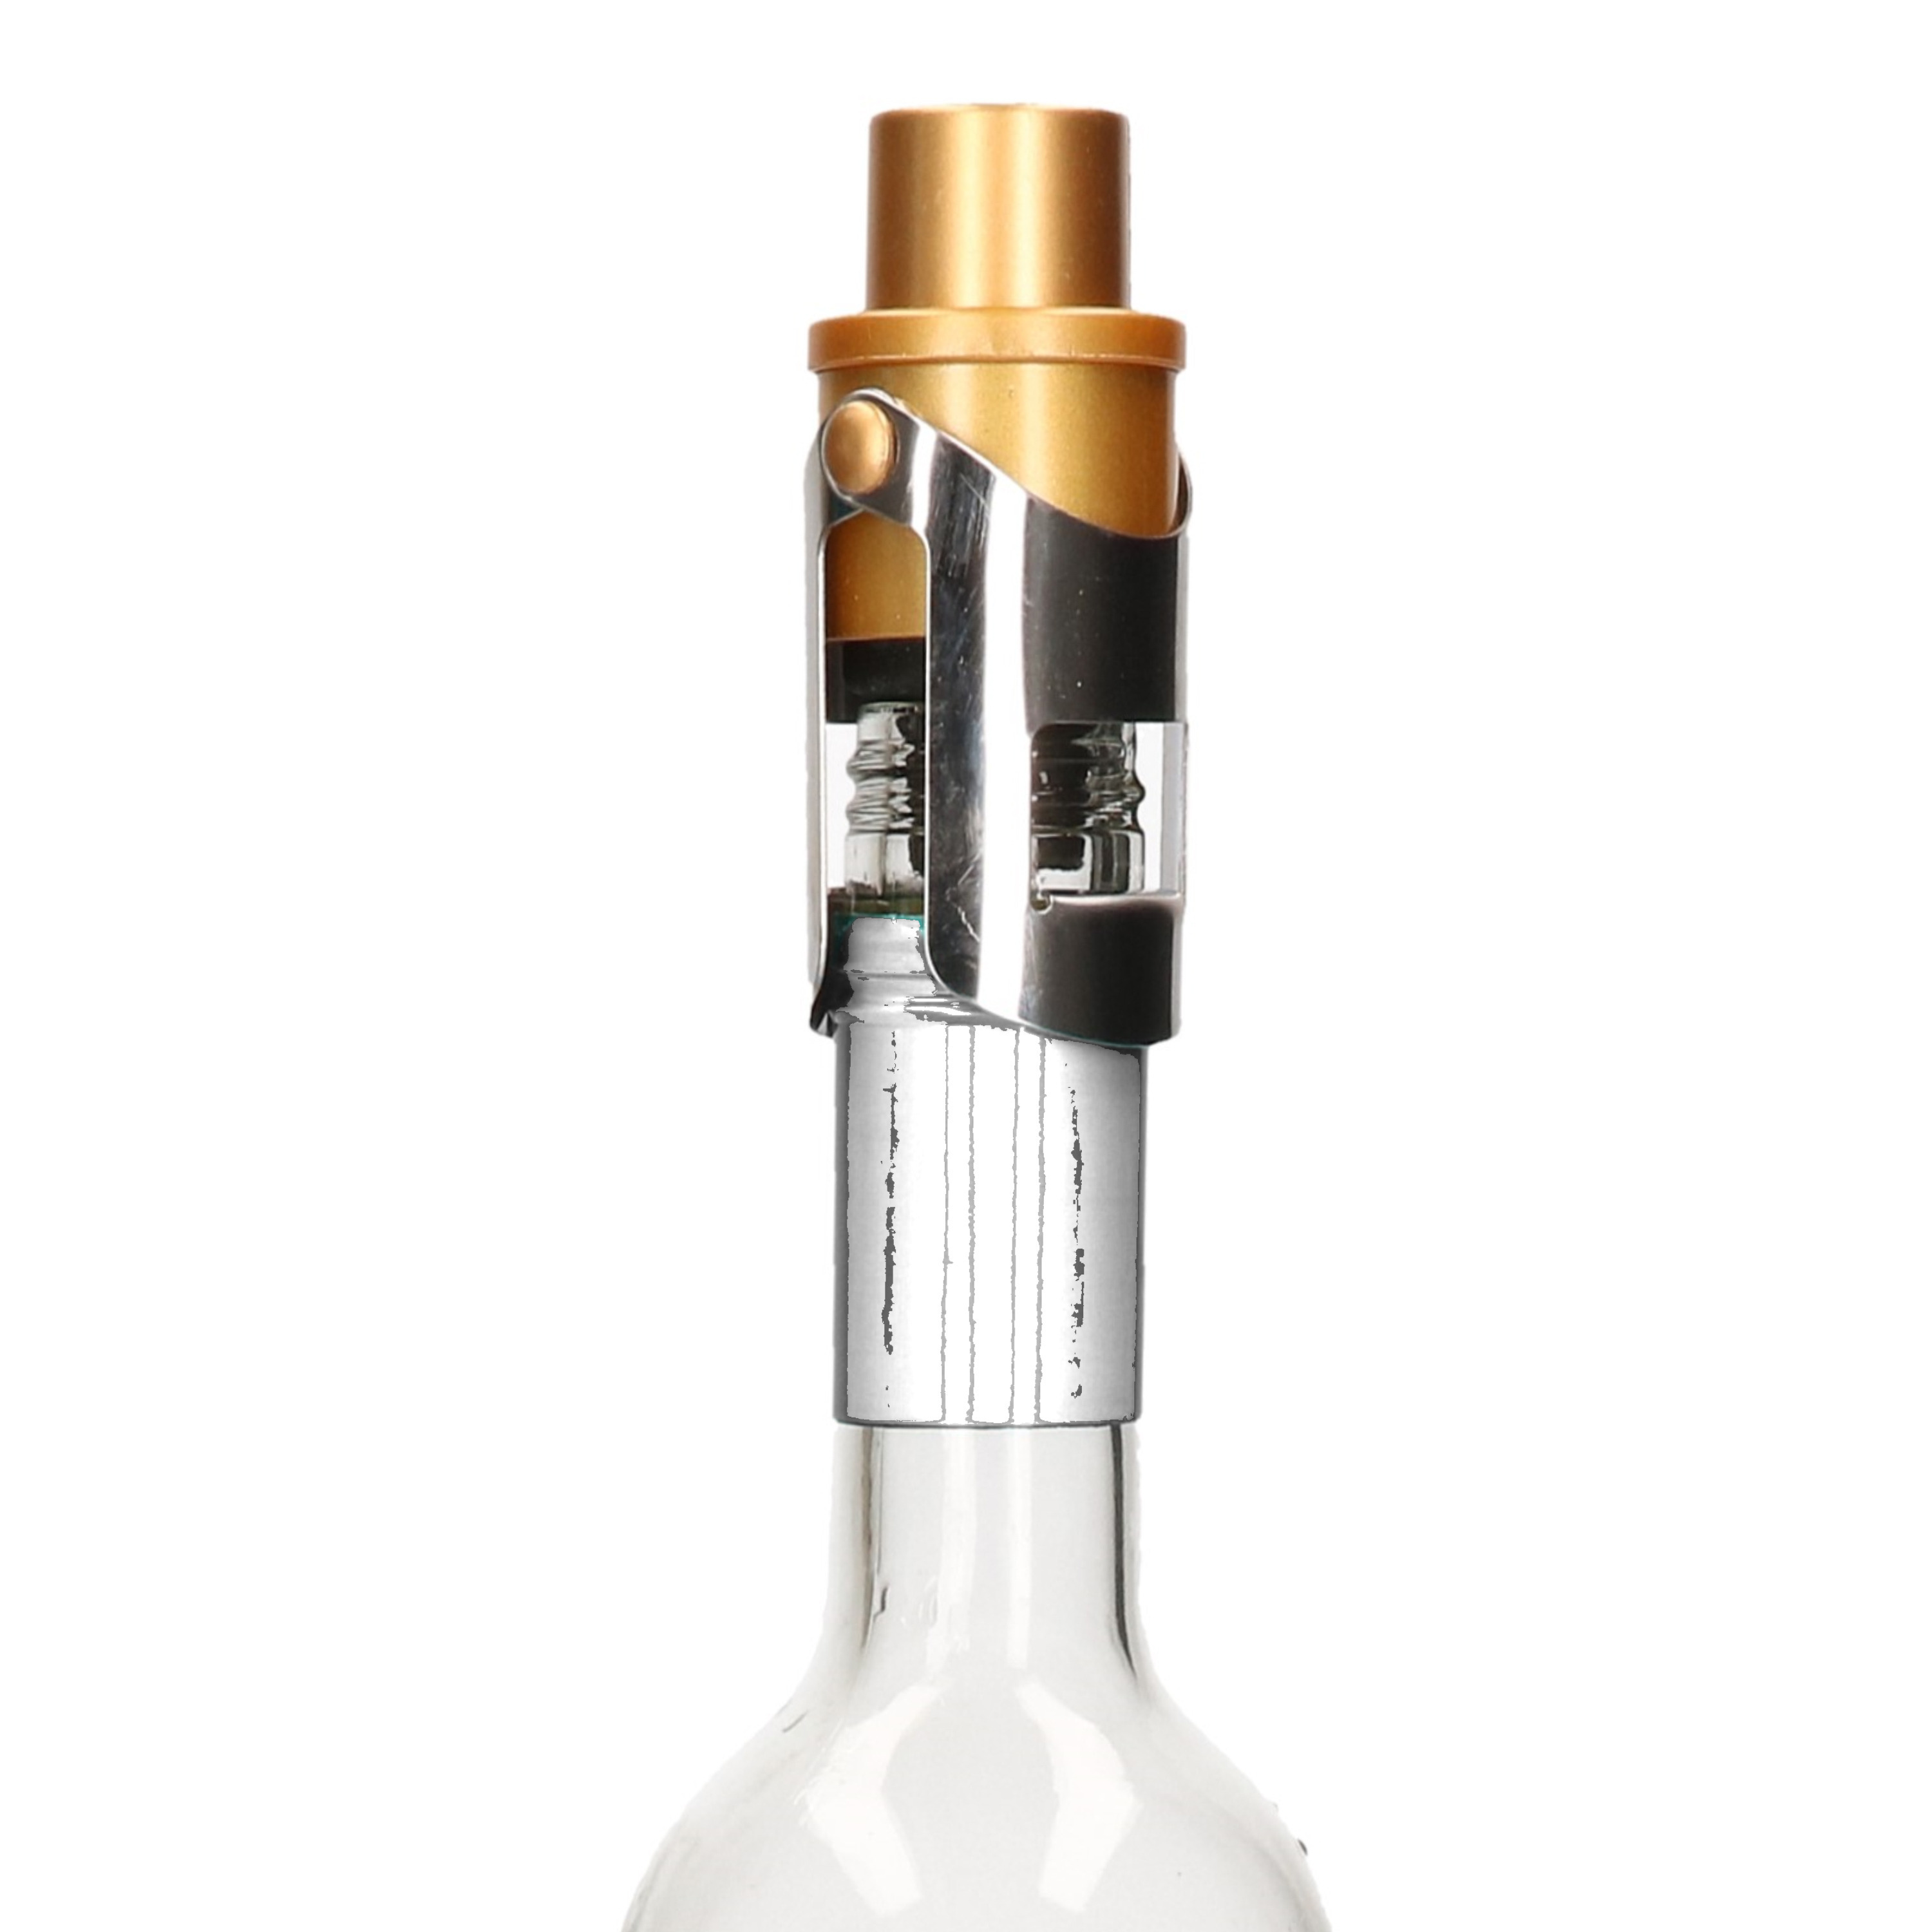 Svenska Living Champagnefles stopper-afsluiter 4 cm Flesafsluiter